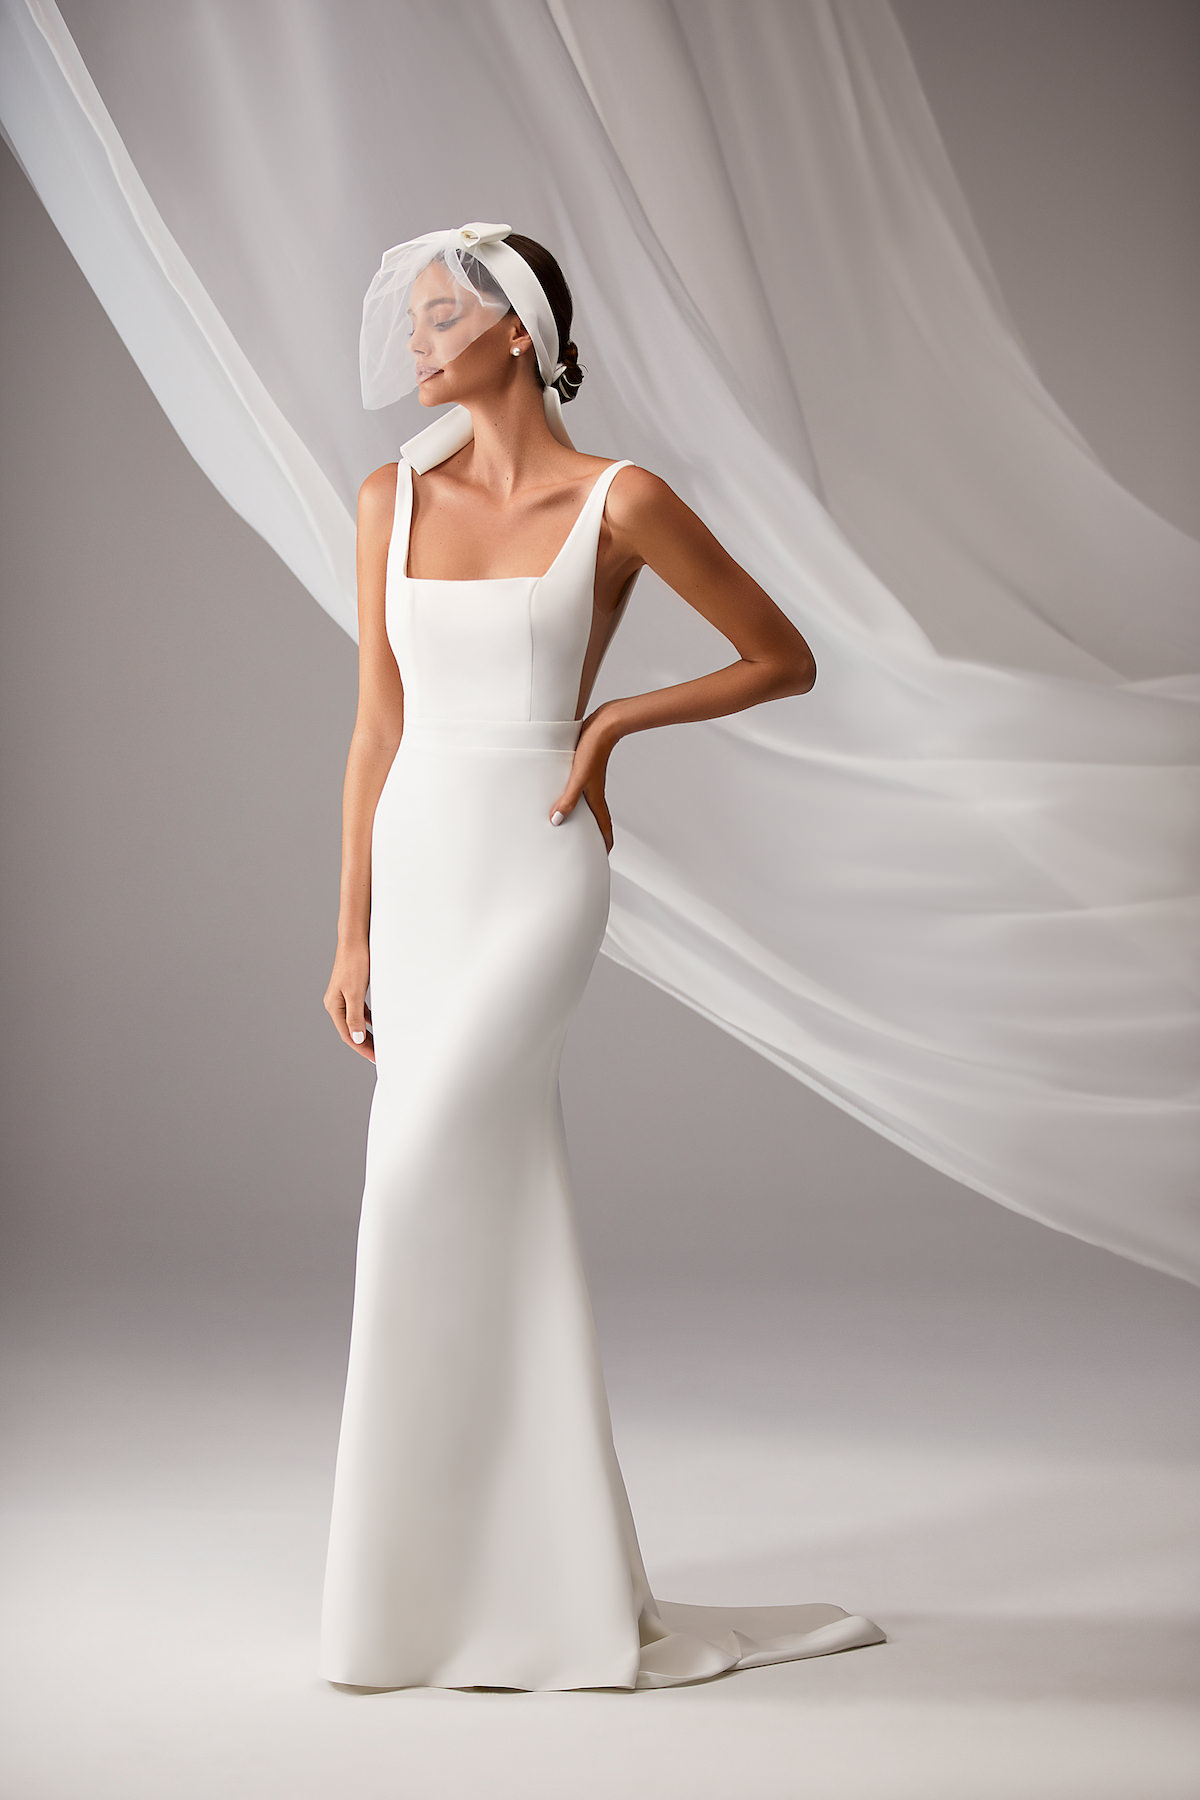 Simple Wedding Dress by Milla Nova - Levi White Lace